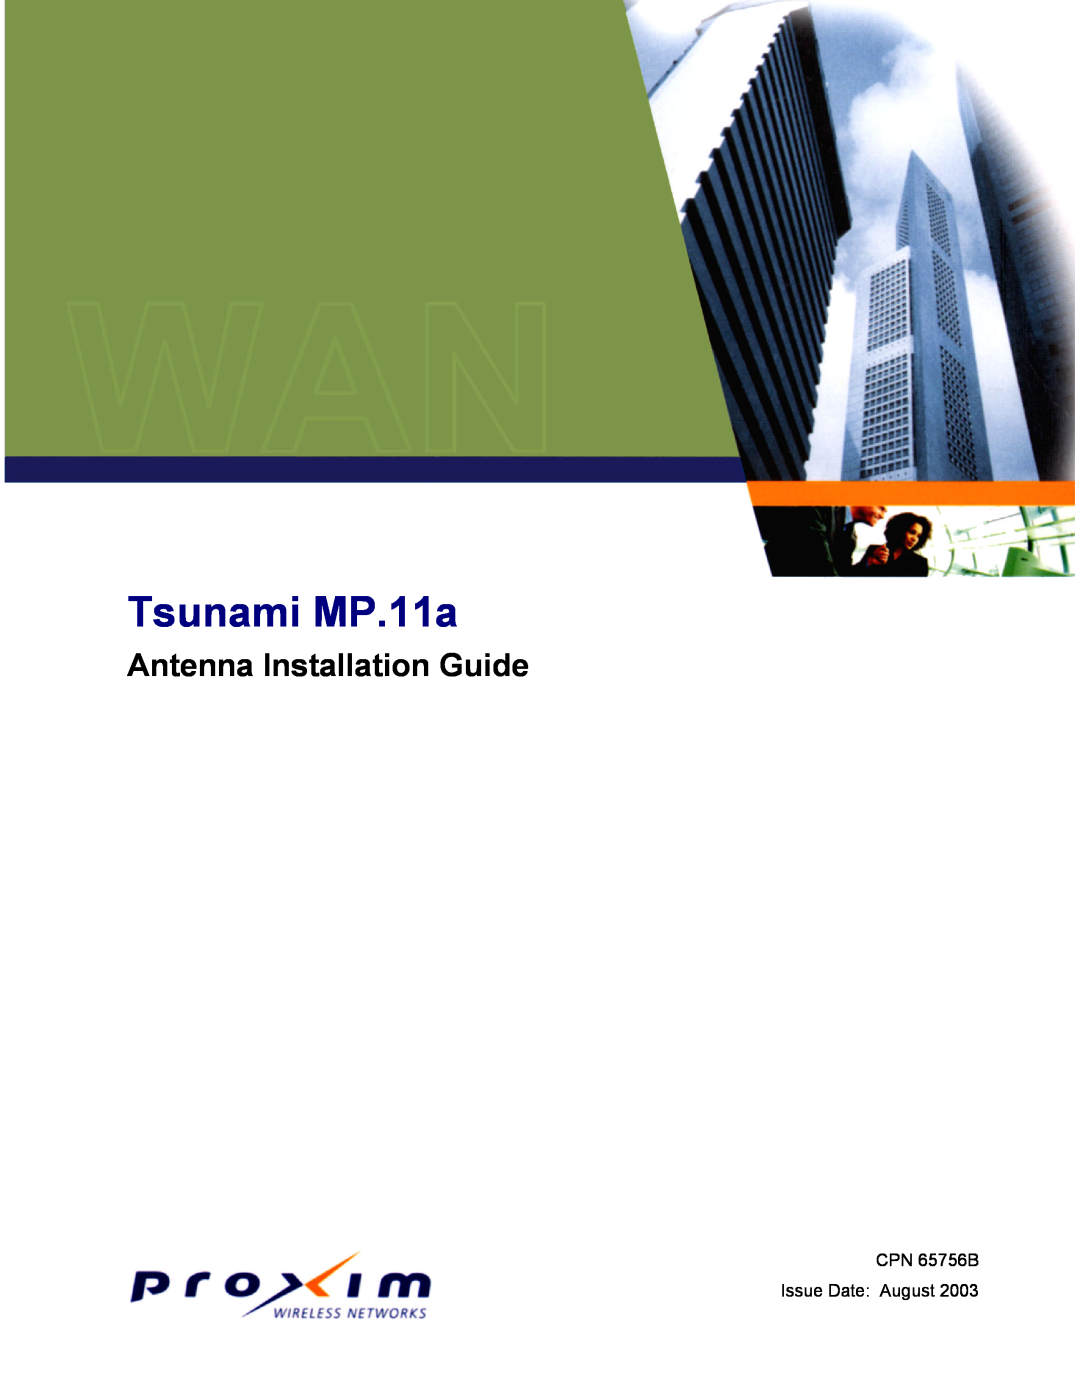 Proxim CPN 65756B manual Tsunami MP.11a, Antenna Installation Guide 